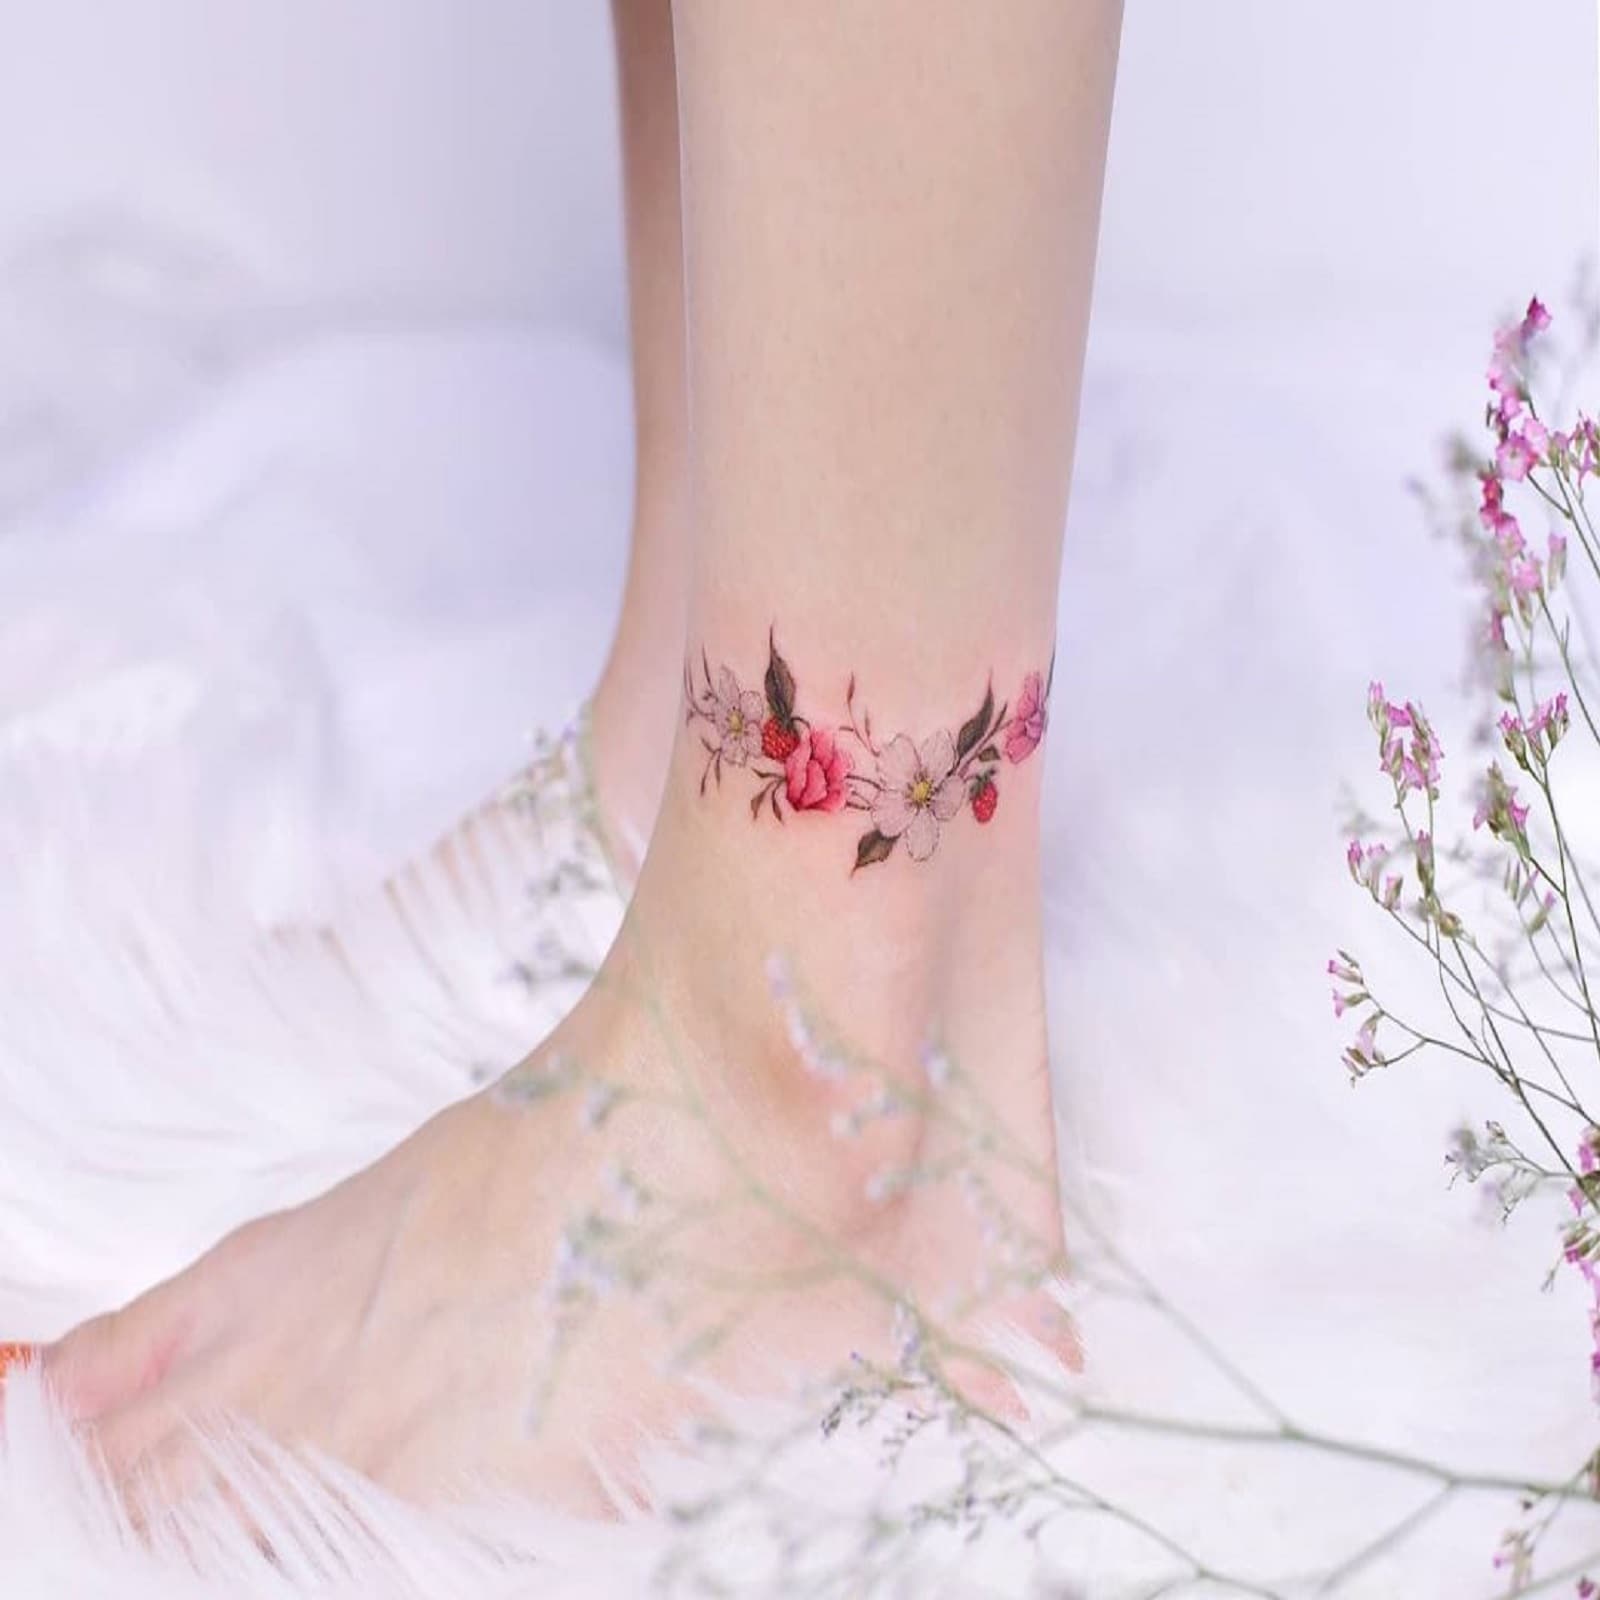 Anklet tattoo designs new fashion tips pra  पर म पयल क जगह बनवए  इन डजइन क Tattoo हर कस क नजर रहग आपक कदम म  News18 हद